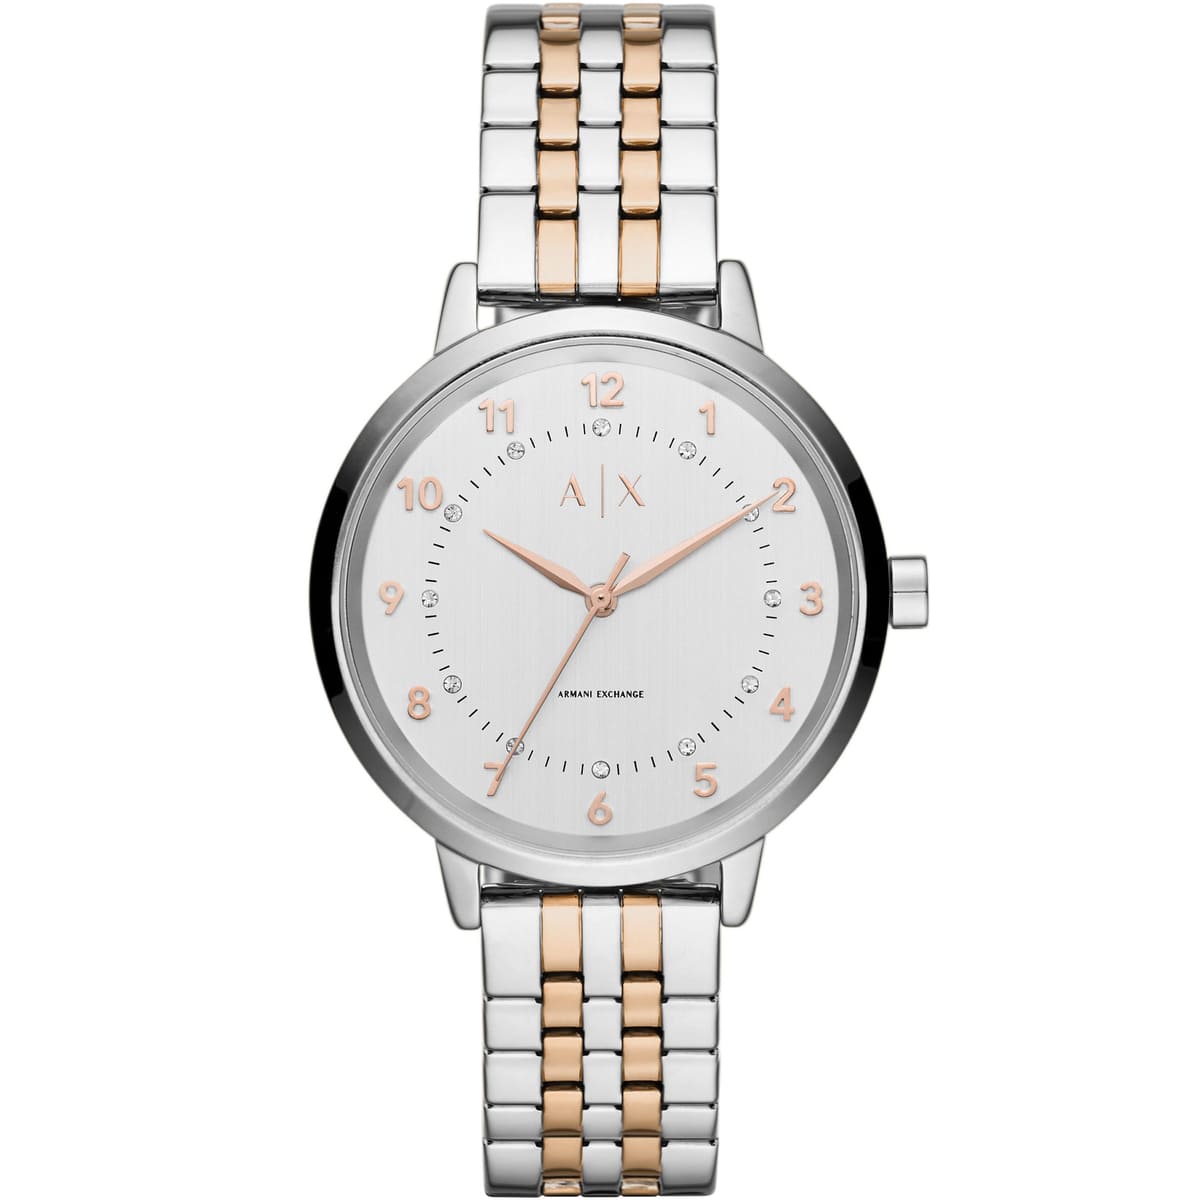 Watch | Ladies Prime AX5370 Payton Exchange Watches Armani